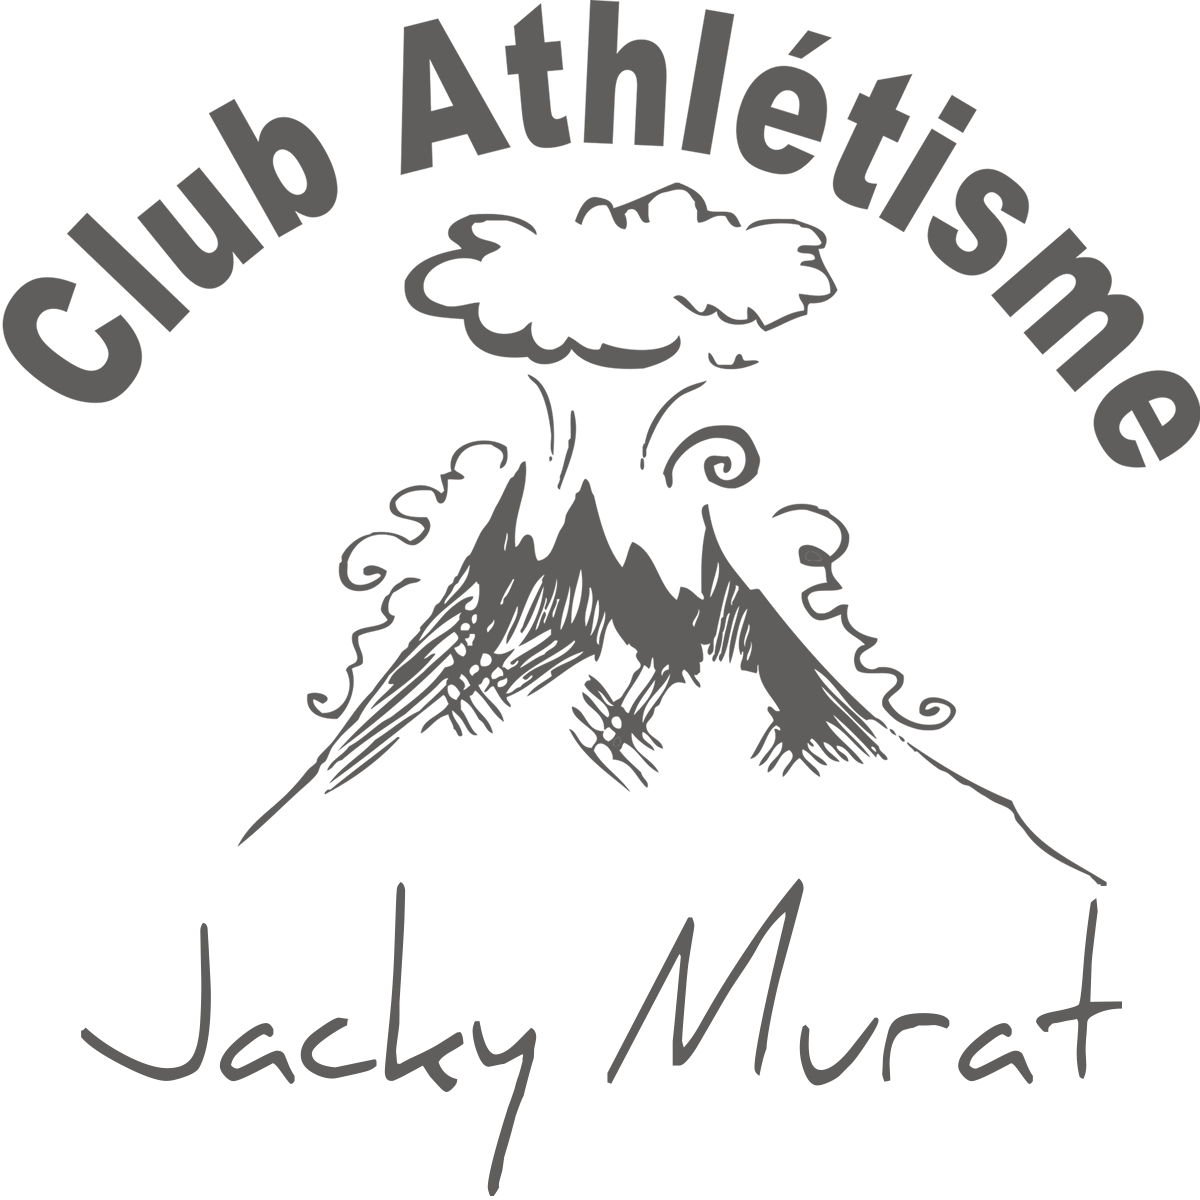 Association d'Athlétisme Jacky-Murat